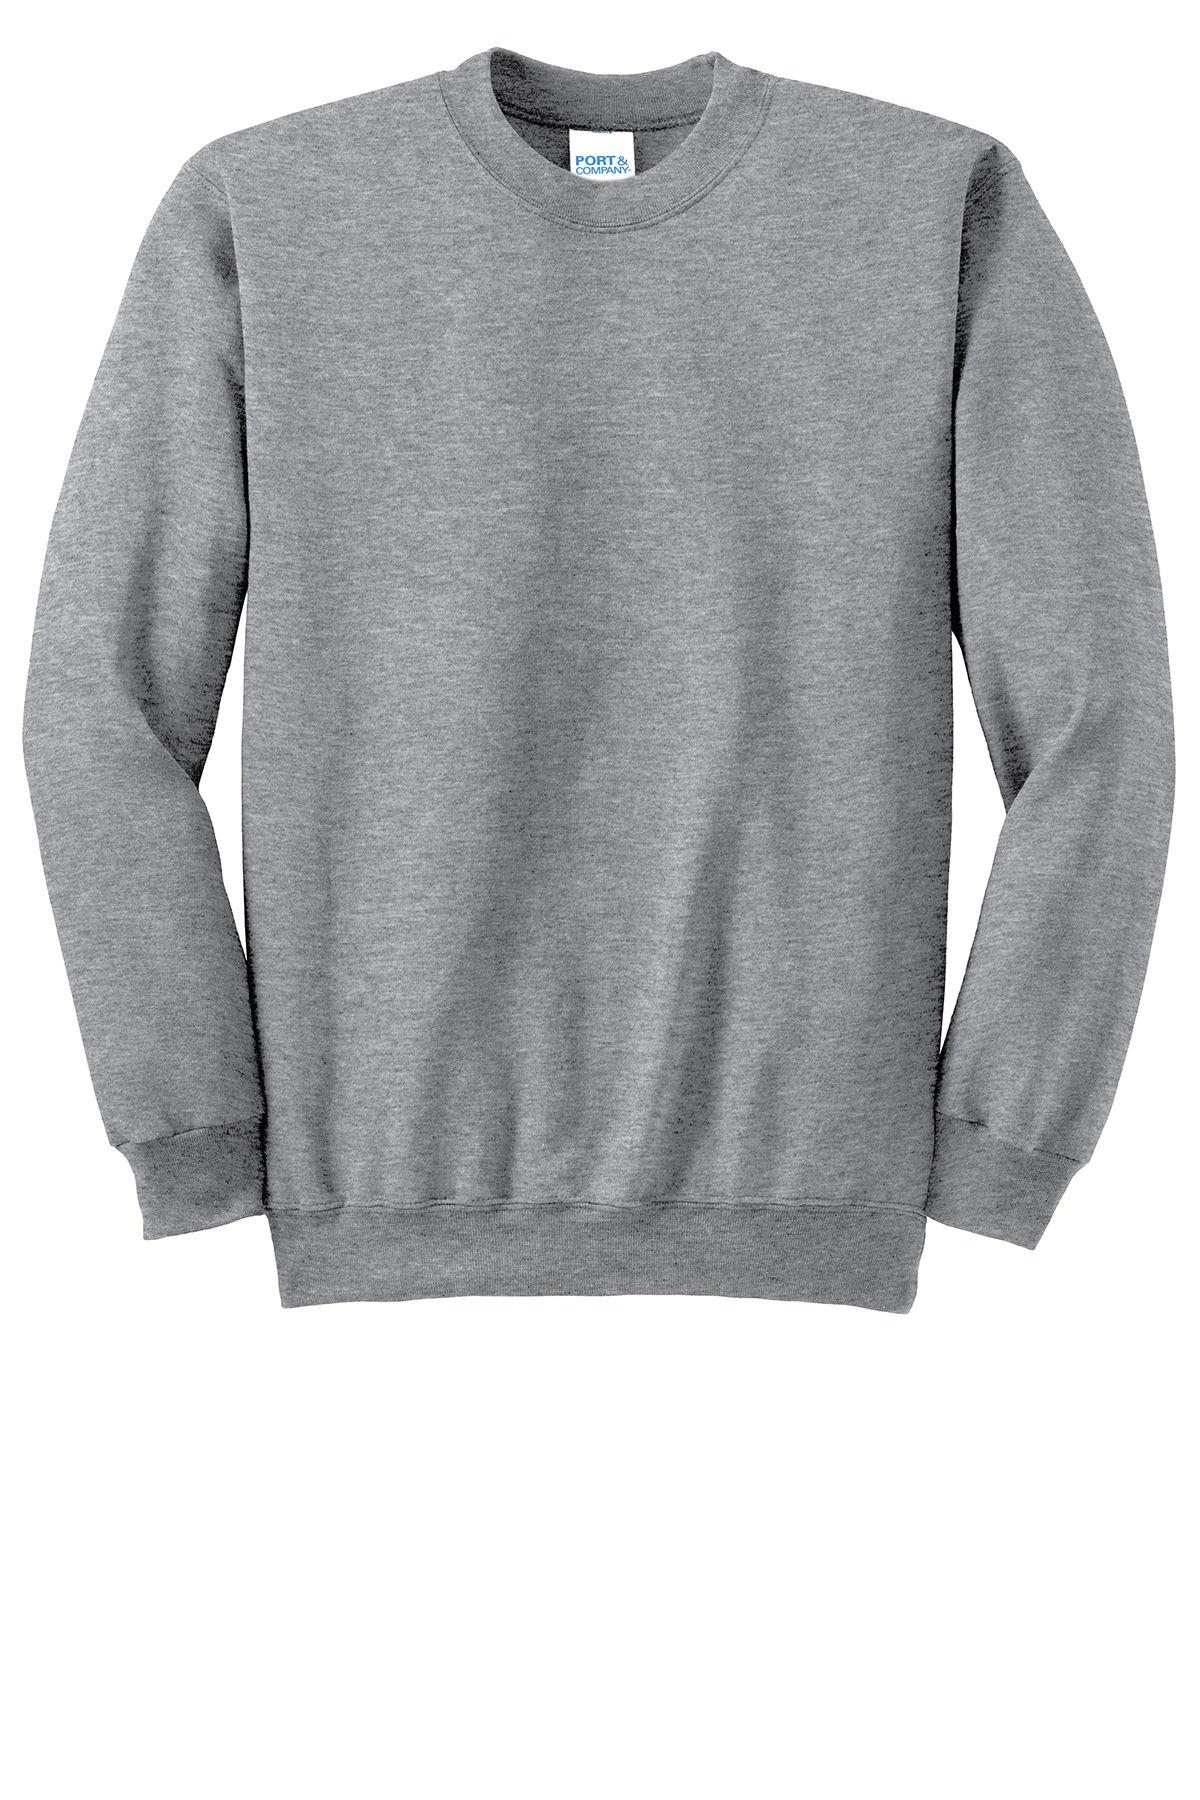 Port & Company Tall Essential Fleece Crewneck Sweatshirt | Product | SanMar